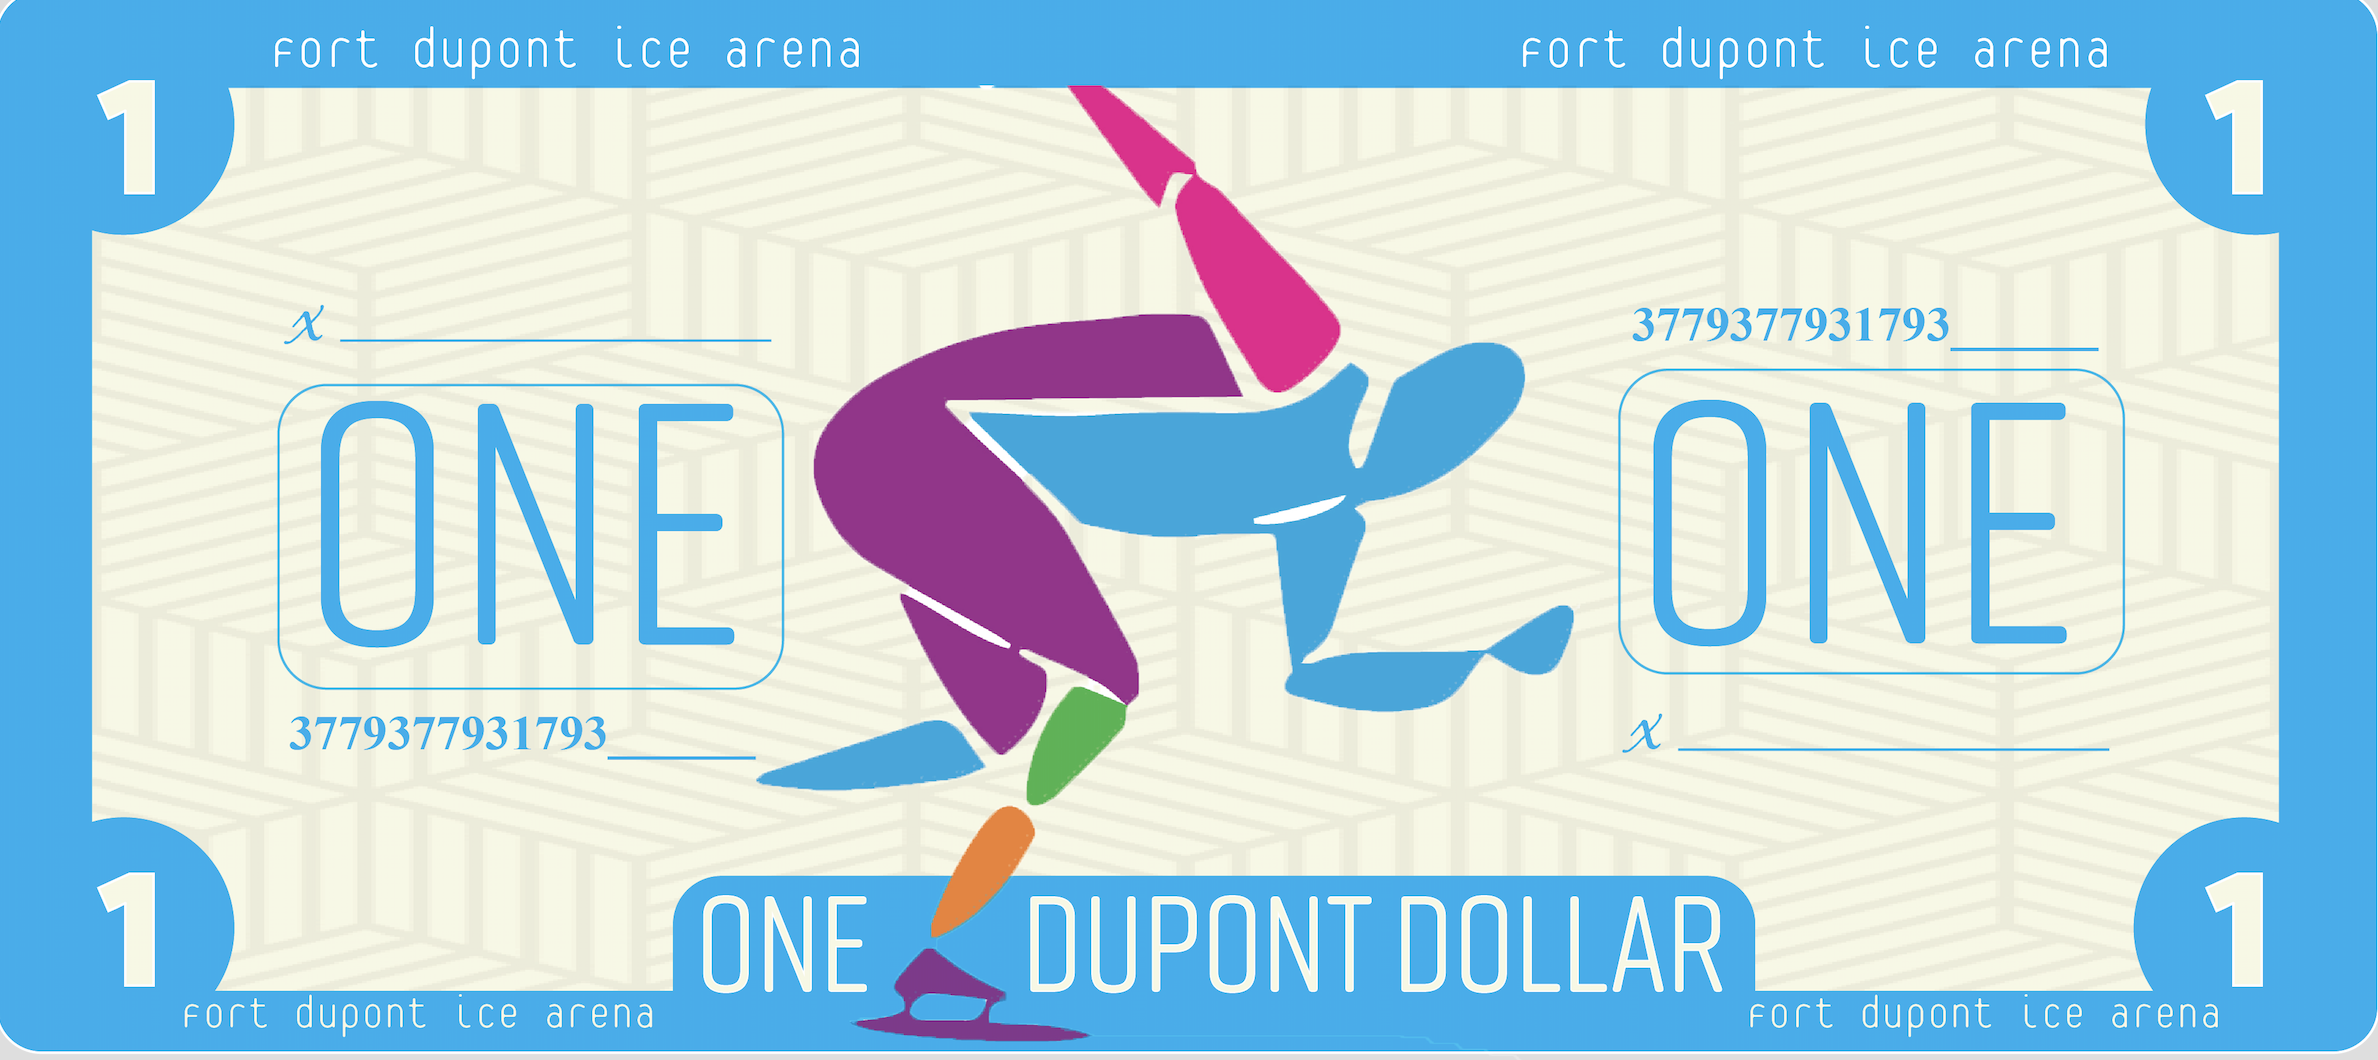 FDIA Dupont Dollars _ One